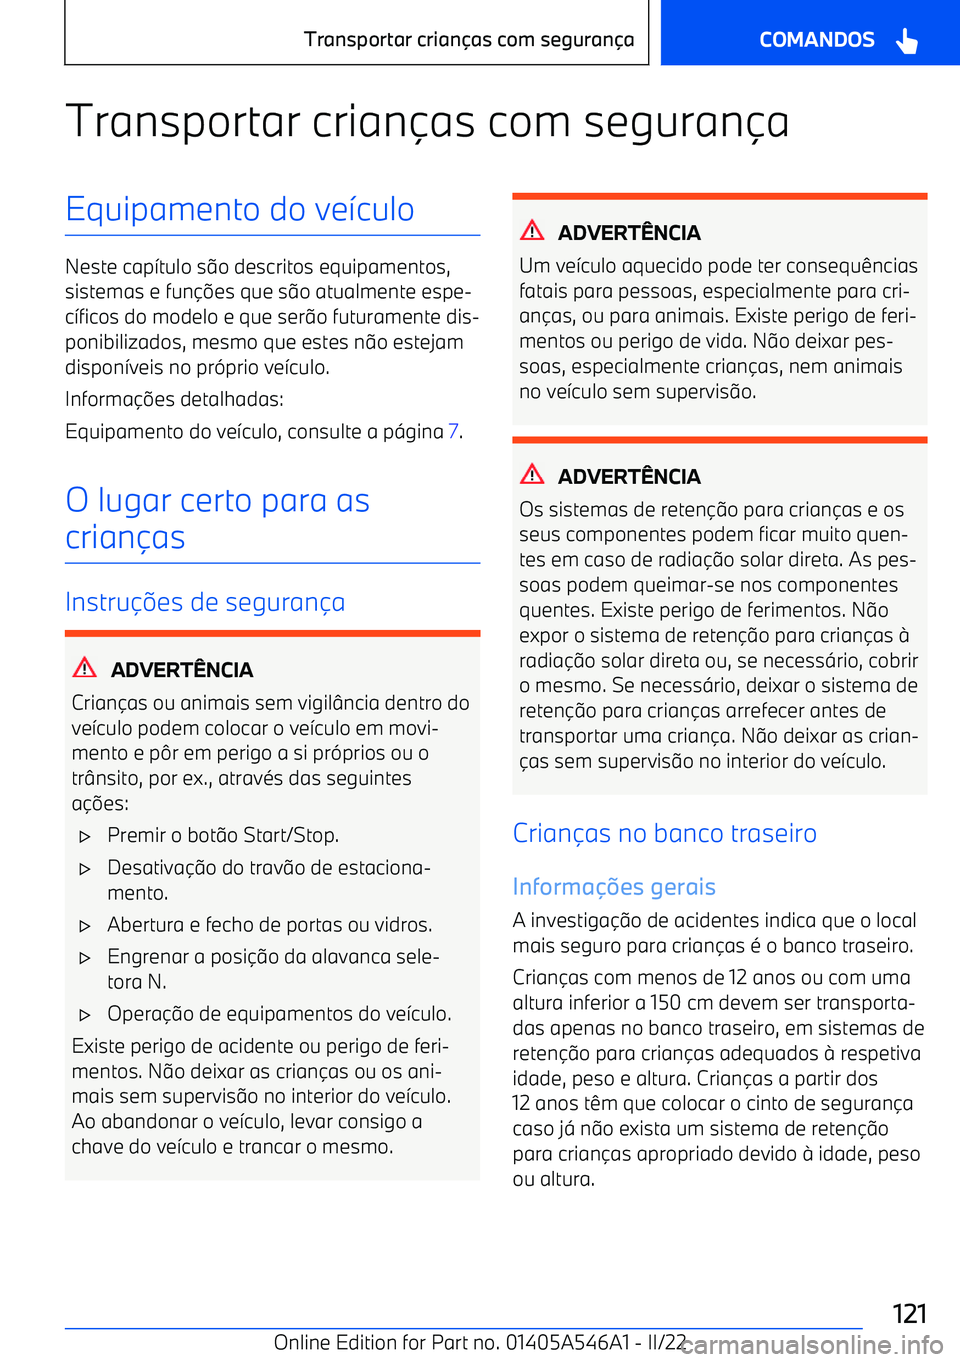 BMW I4 2022  Manual do condutor (in Portuguese) Transportar crianas com seguran aEquipamento do ve